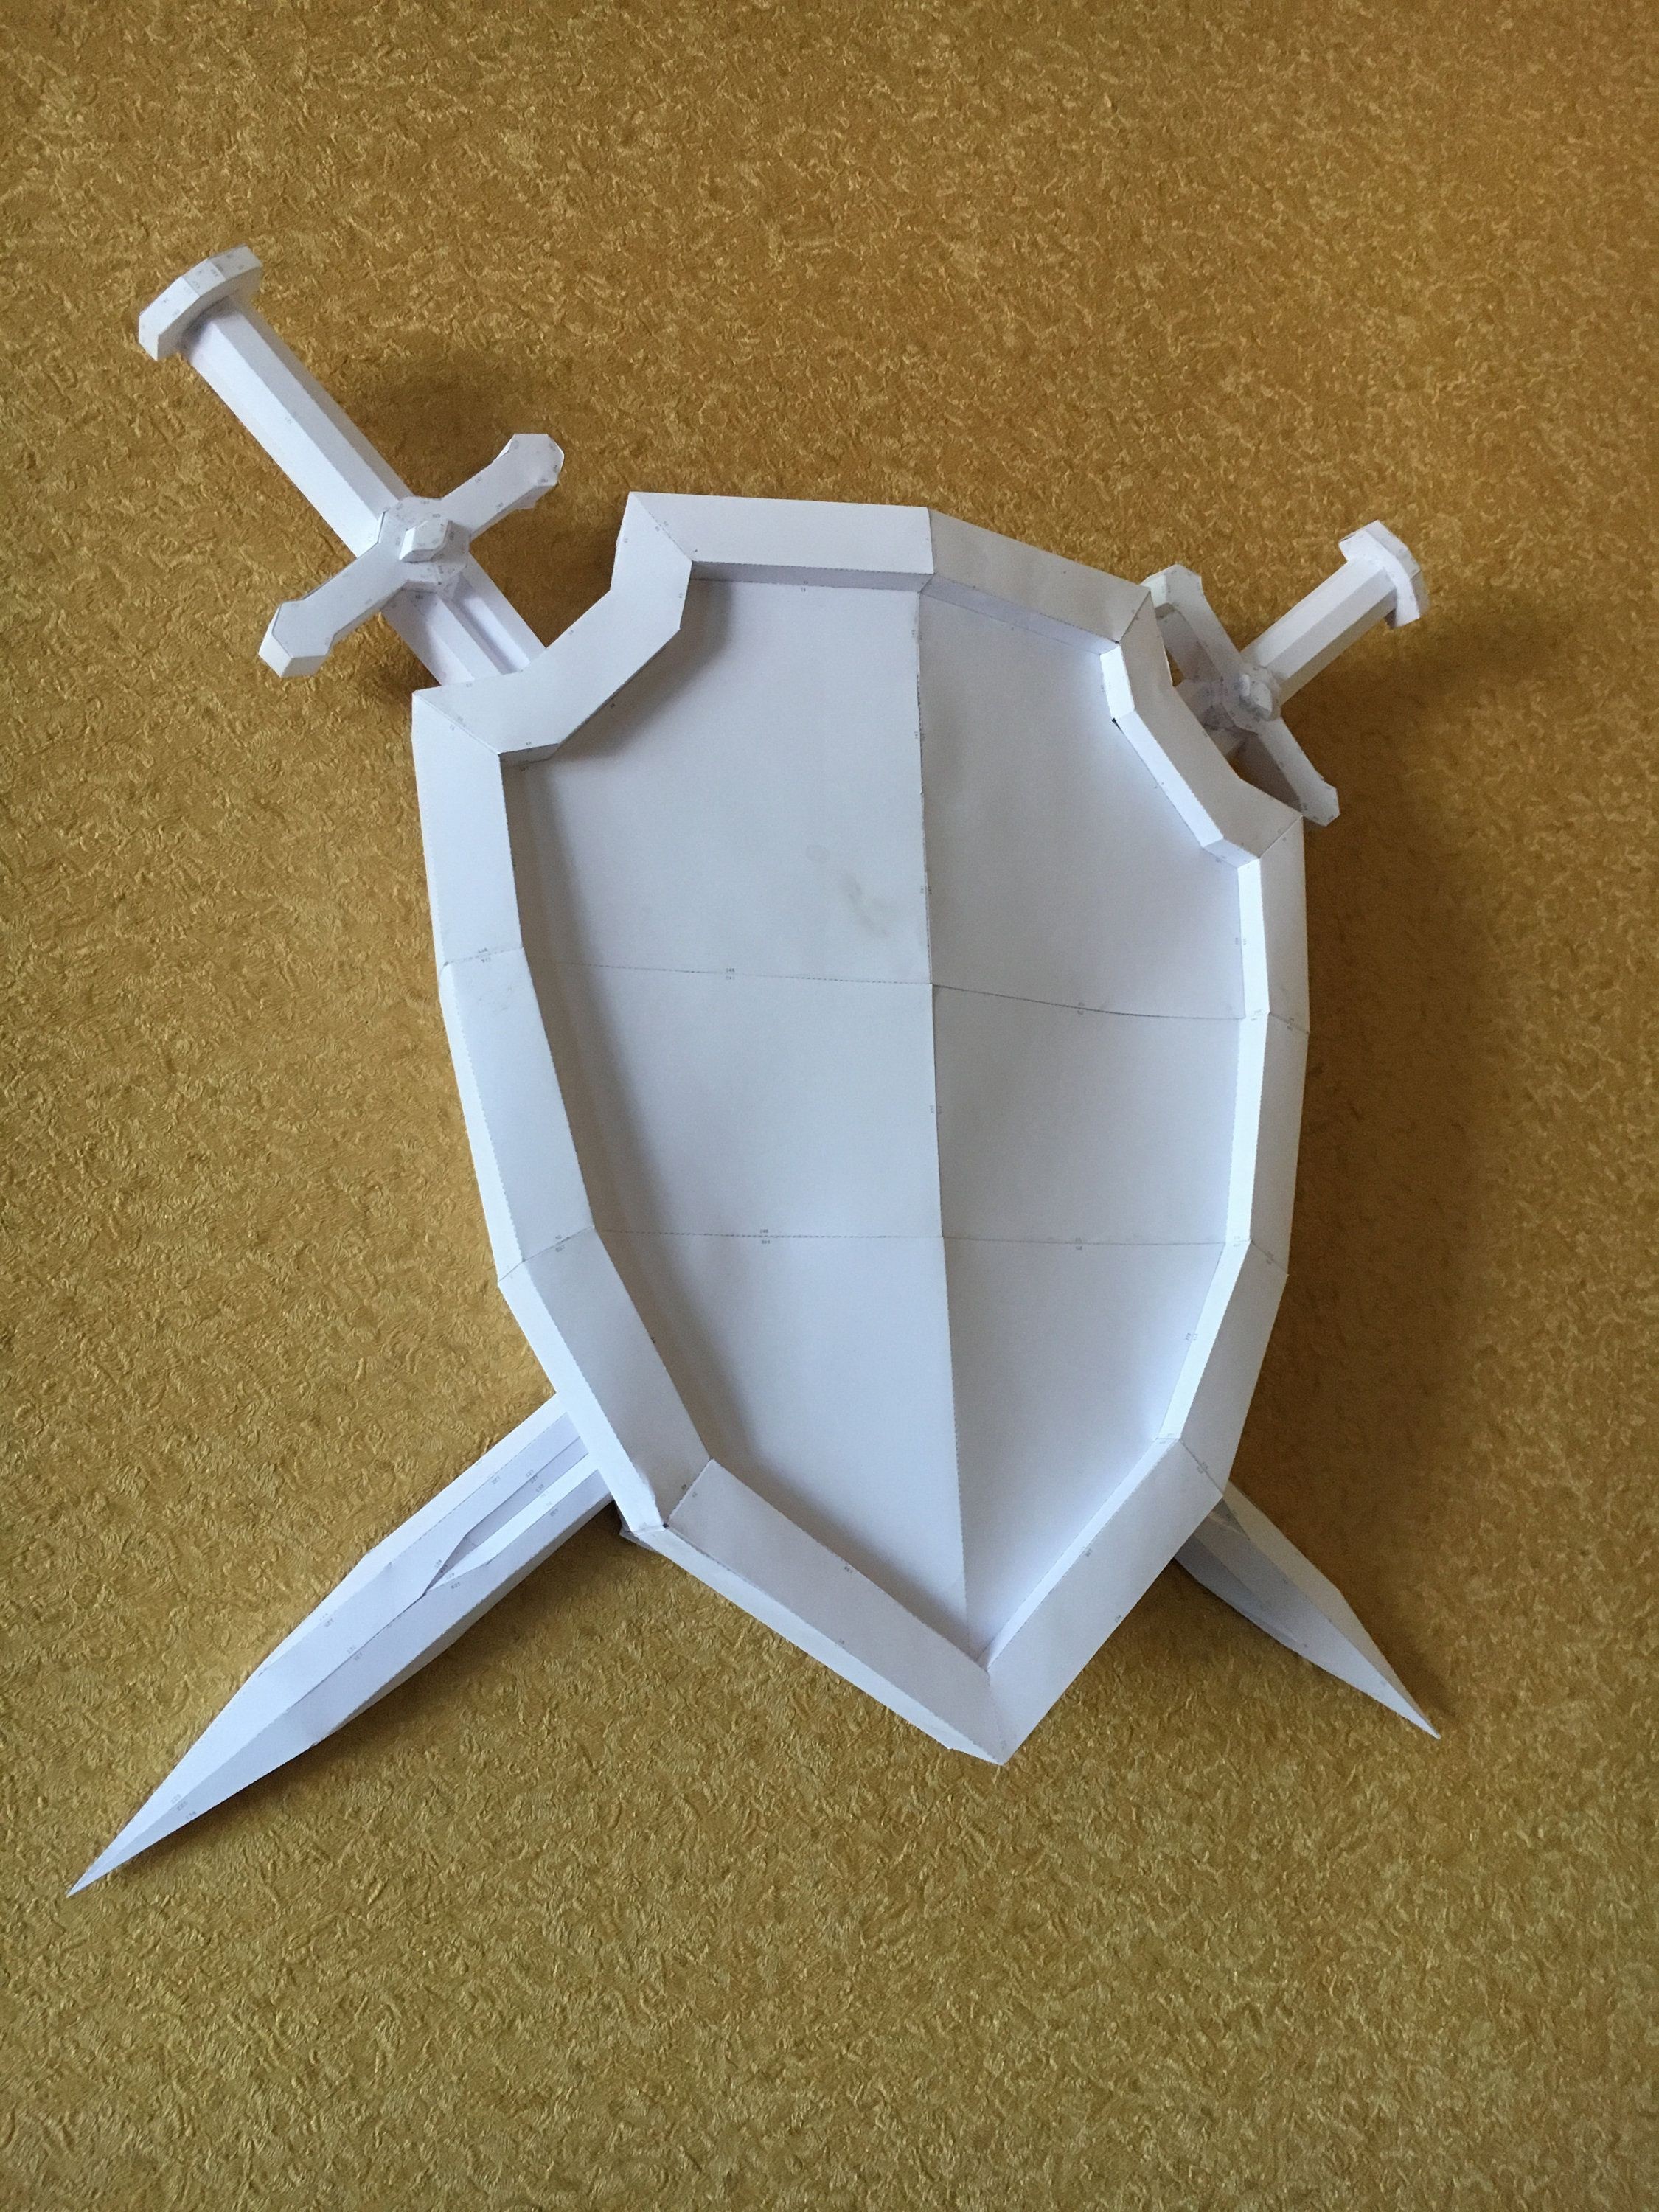 Kingdom Hearts Papercraft Sword Shield Diy Papercraft Model ÐÑÐ¼Ð°Ð¶Ð½ÑÐµ Ð¸Ð·Ð´ÐµÐ Ð¸Ñ